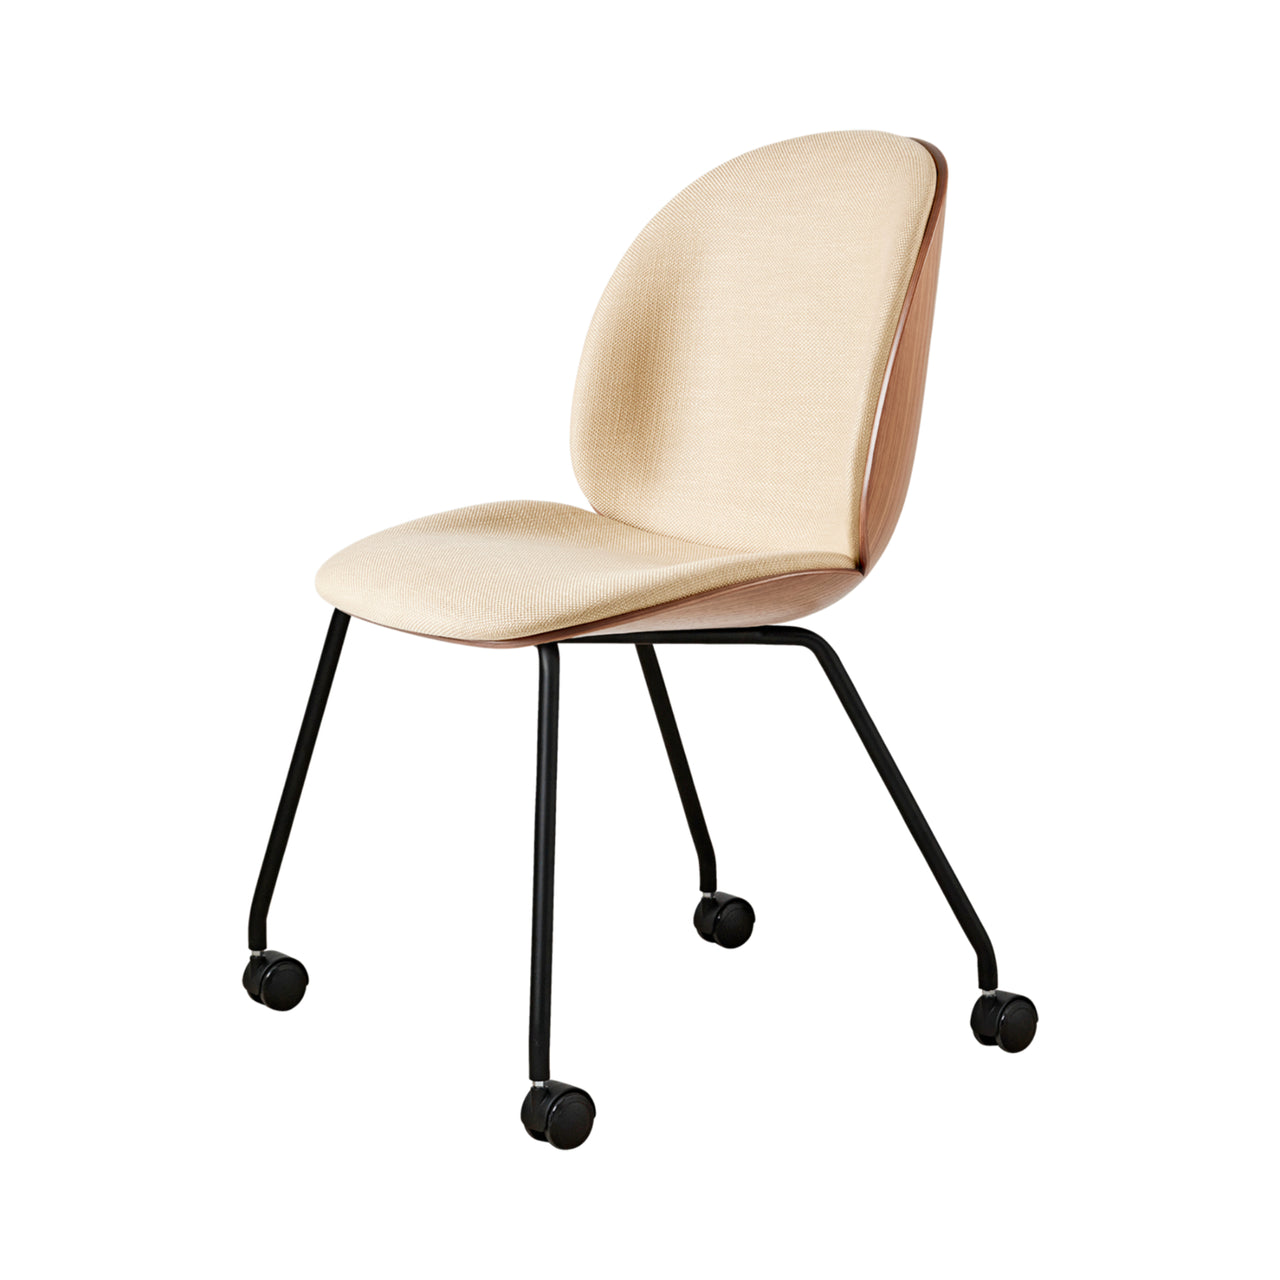 Beetle Meeting Chair Veneer Shell: 4-Legs with Castors + Front Upholstered + American Walnut